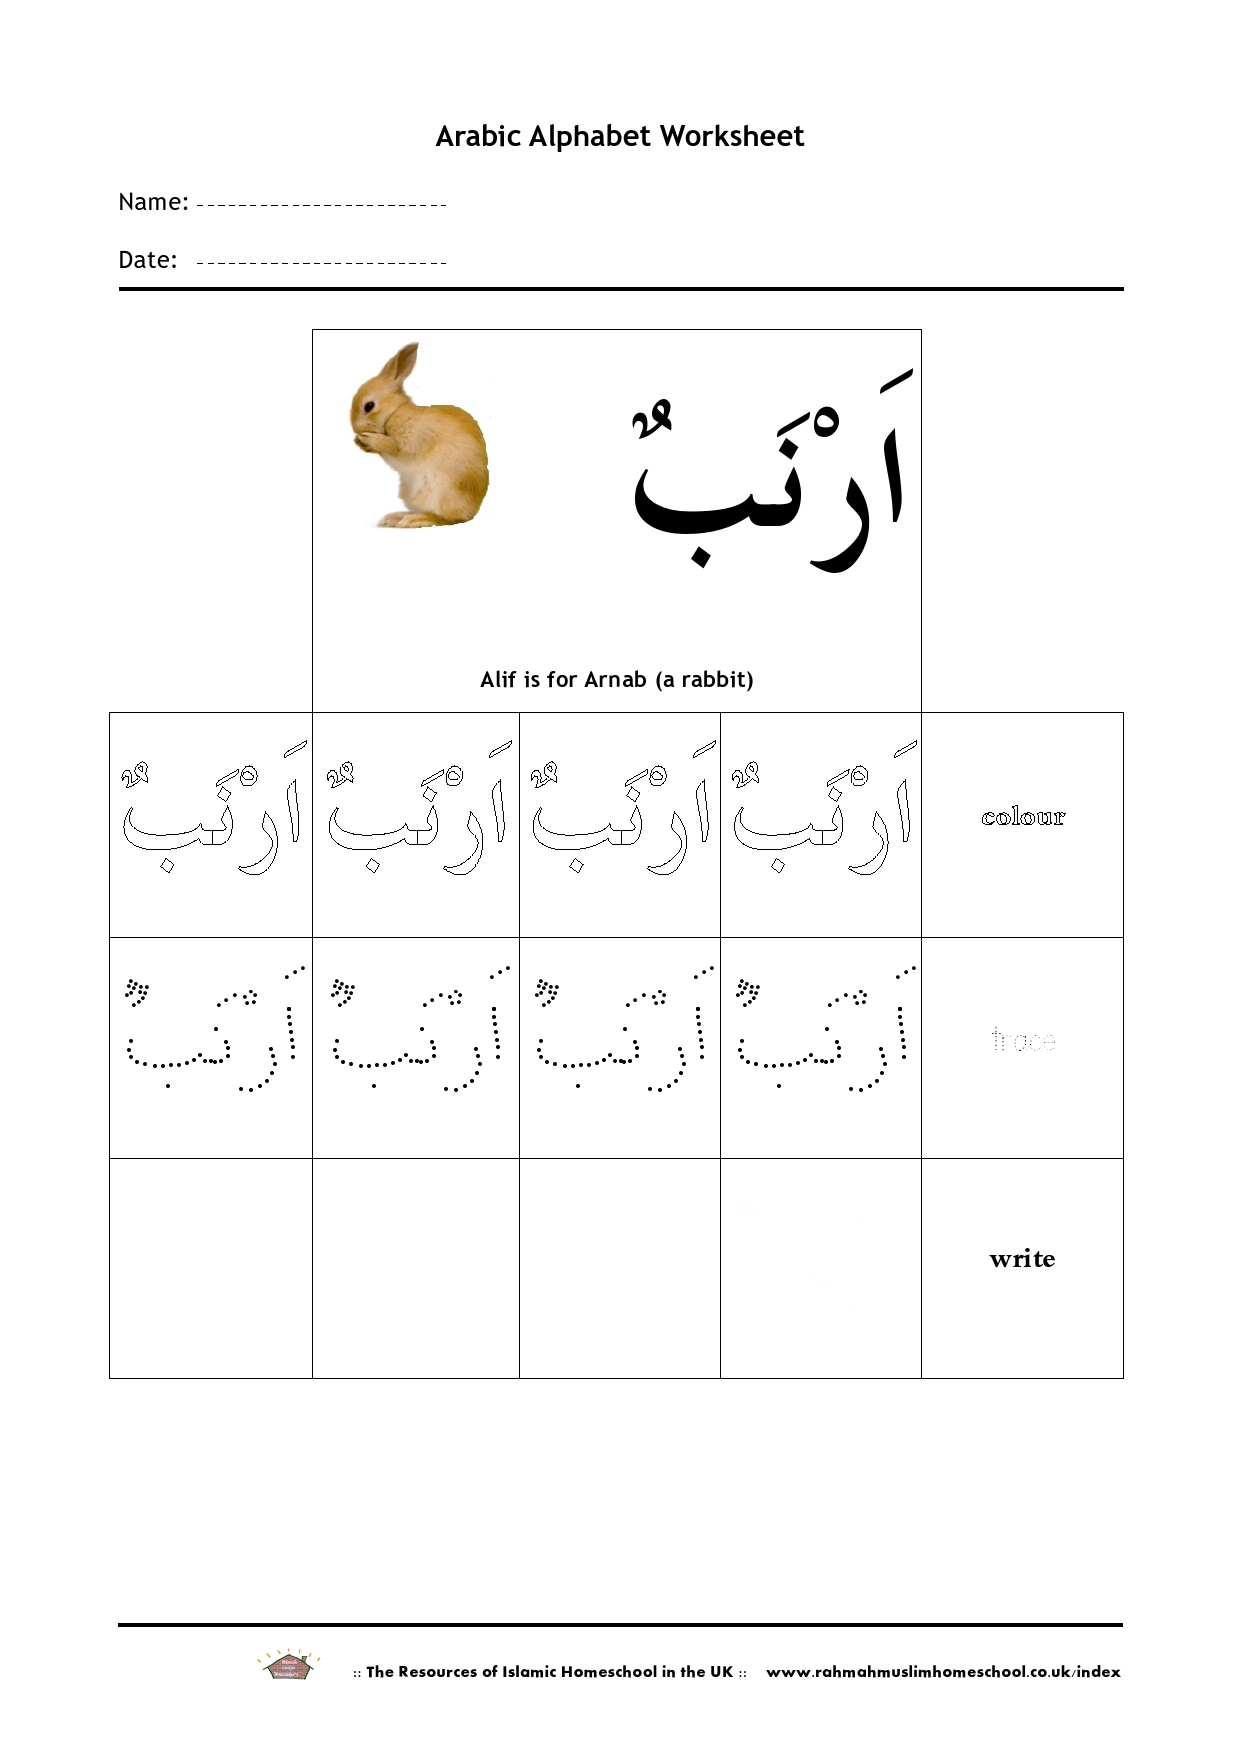 Free Arabic Alphabet Worksheet Image